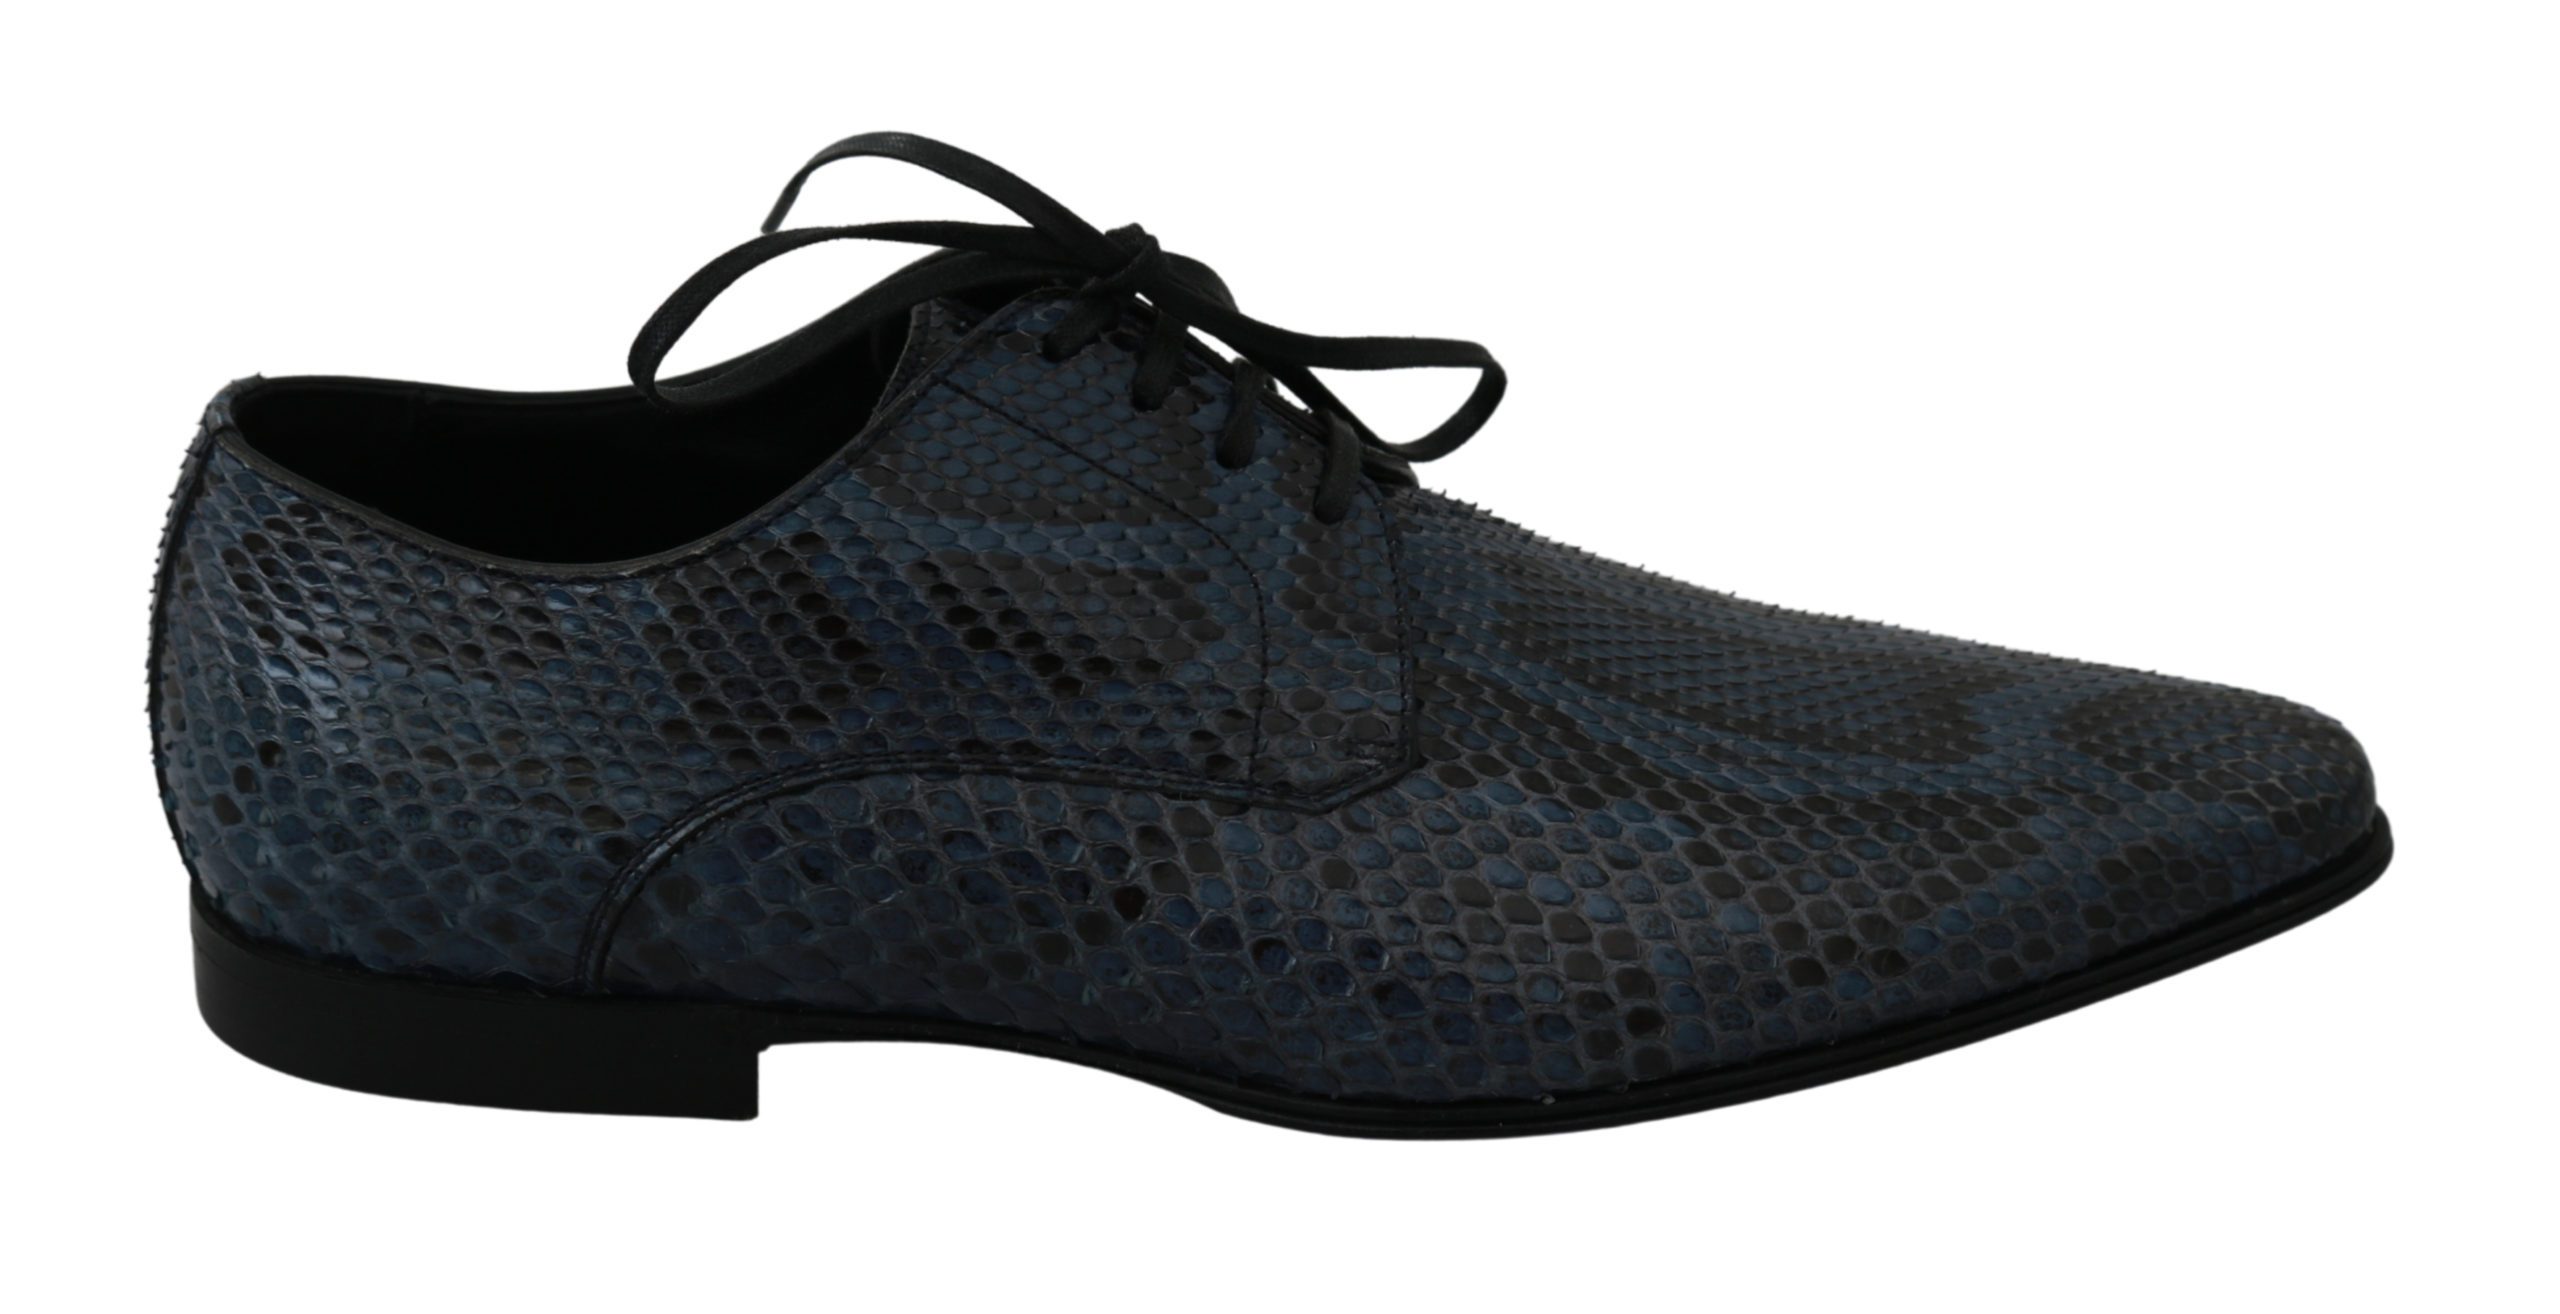 Dolce & Gabbana Men's Python Leather Dress Shoes Blue MV2673 - EU39/US6